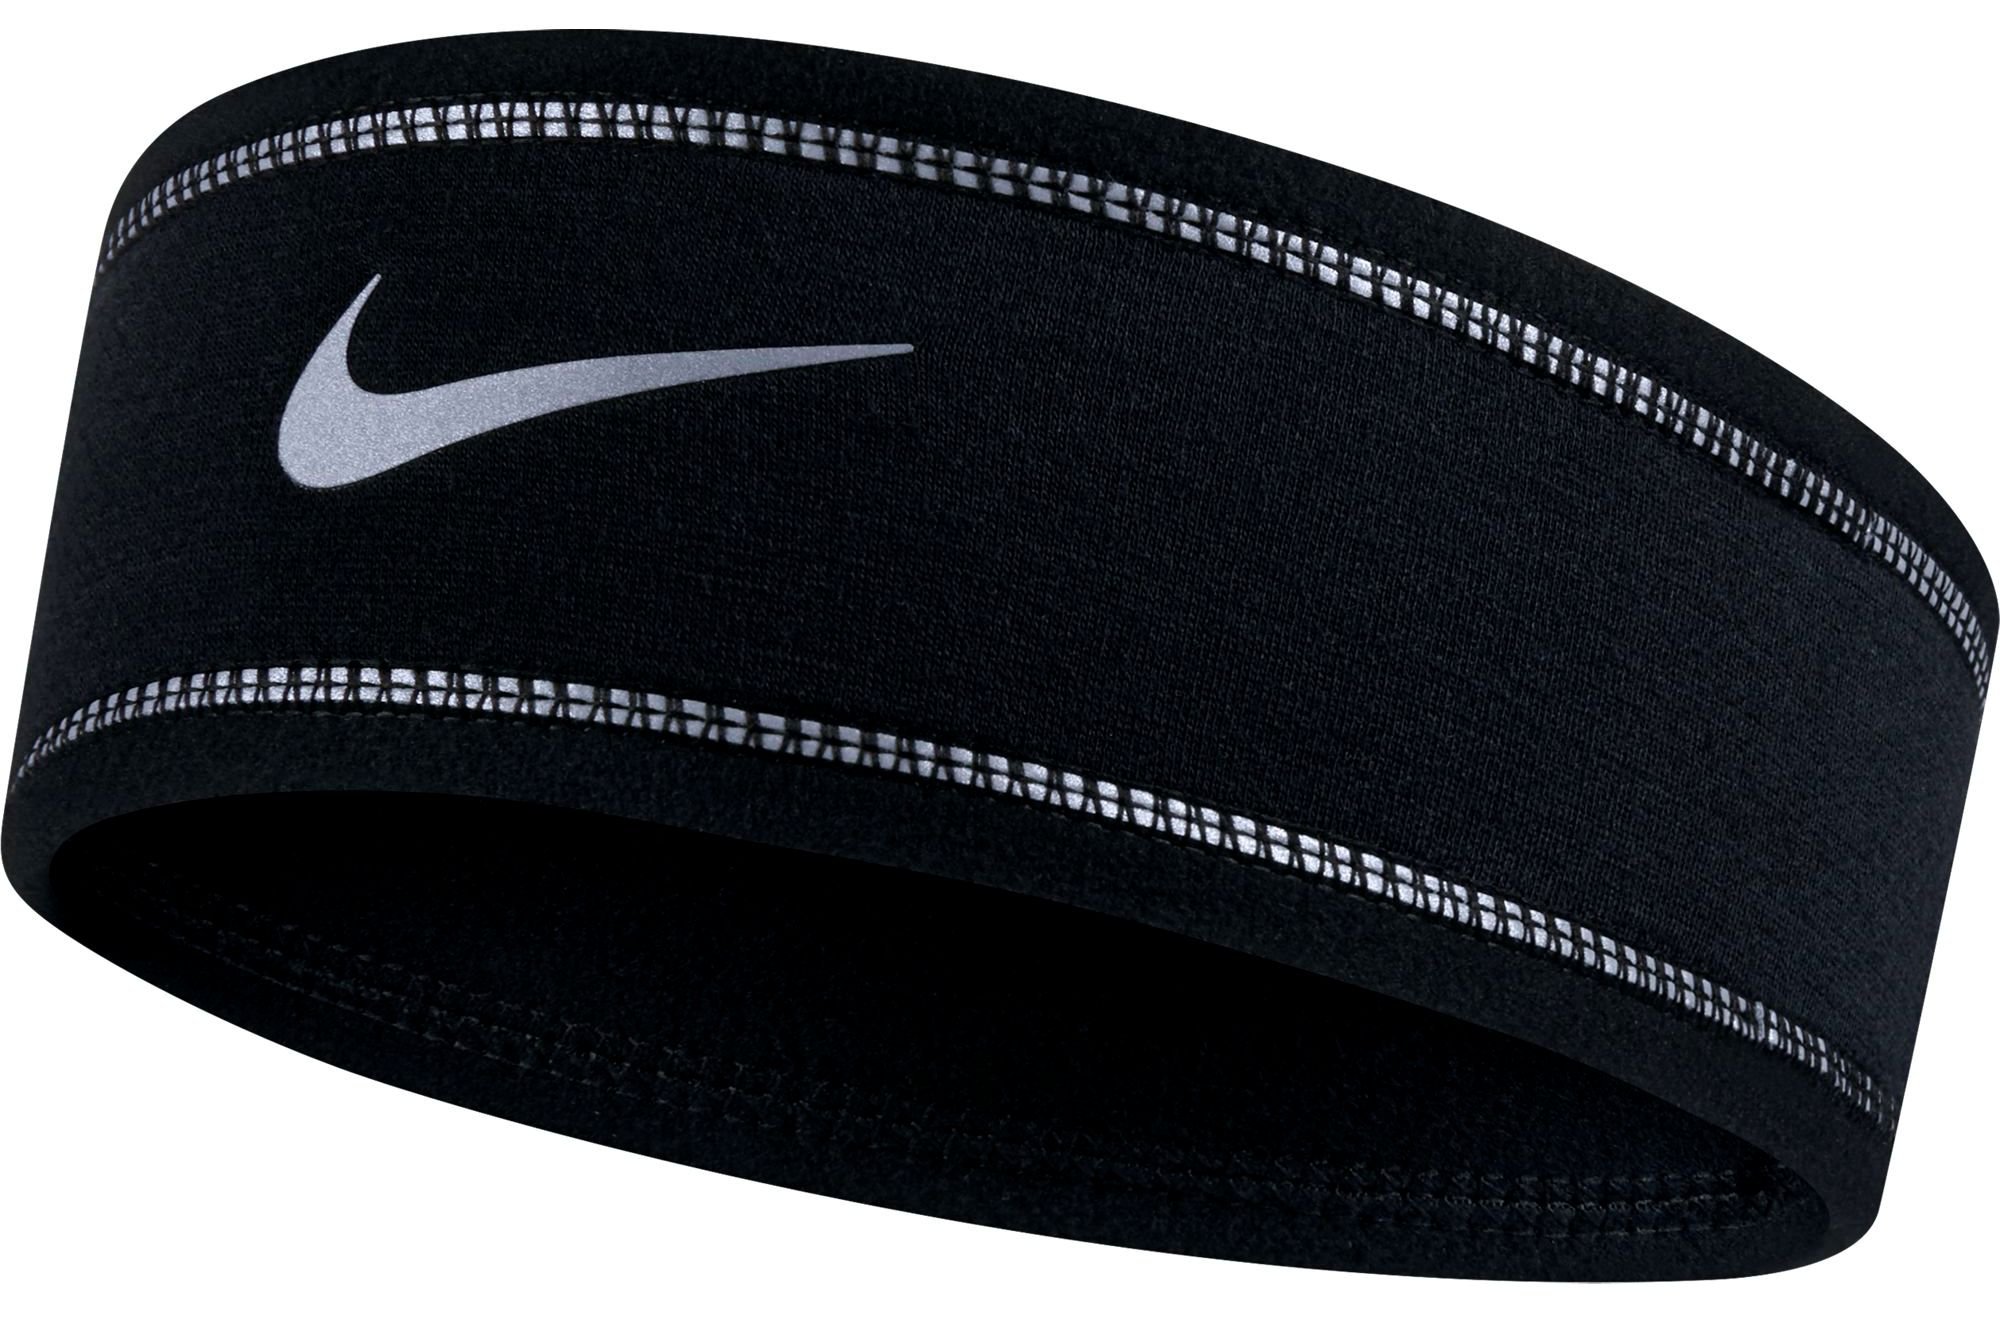 Повязки на голову бег. Headband Nike. Повязка Nike Headband. Nike Running Headband. Спортмастер повязка Nike.